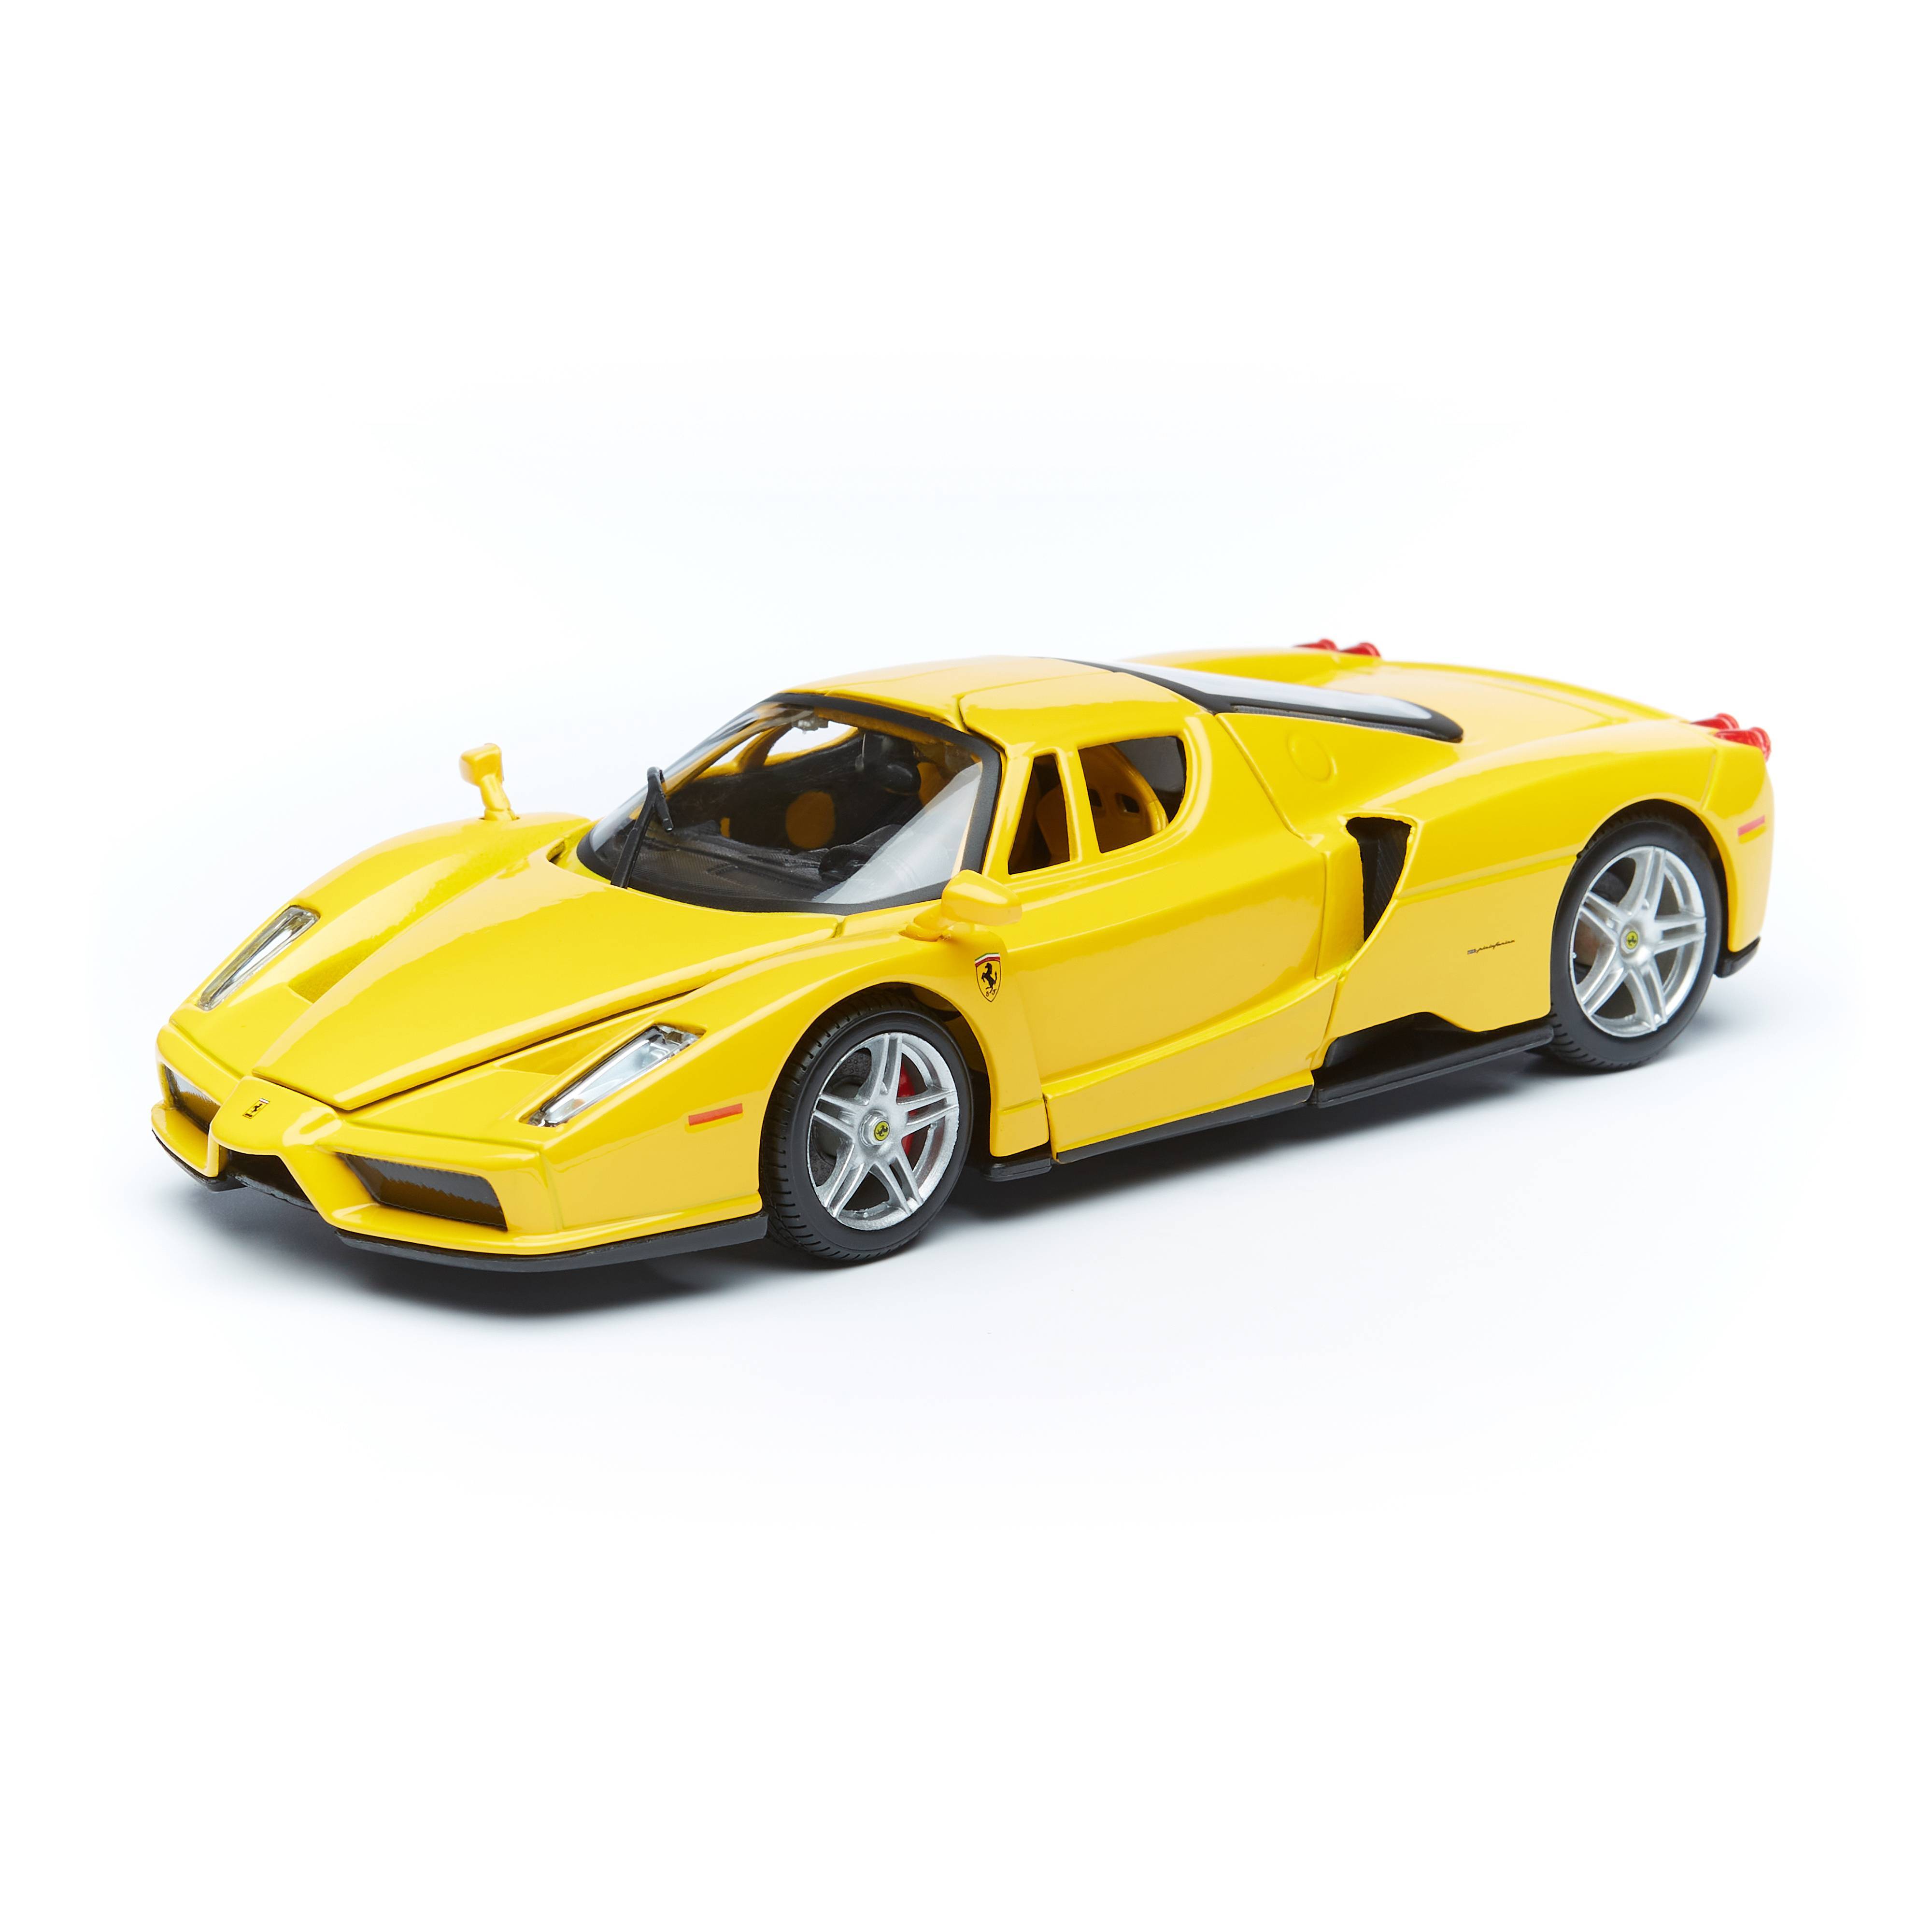 Bburago Коллекционная машинка Феррари 1:24 Ferrari Enzo, жёлтая, 18-26006 bburago 1 43 488 f40 599 250 458 f12 portofino 812 roma sp1 sf90 f8 246 enzo static simulation diecast alloy model car